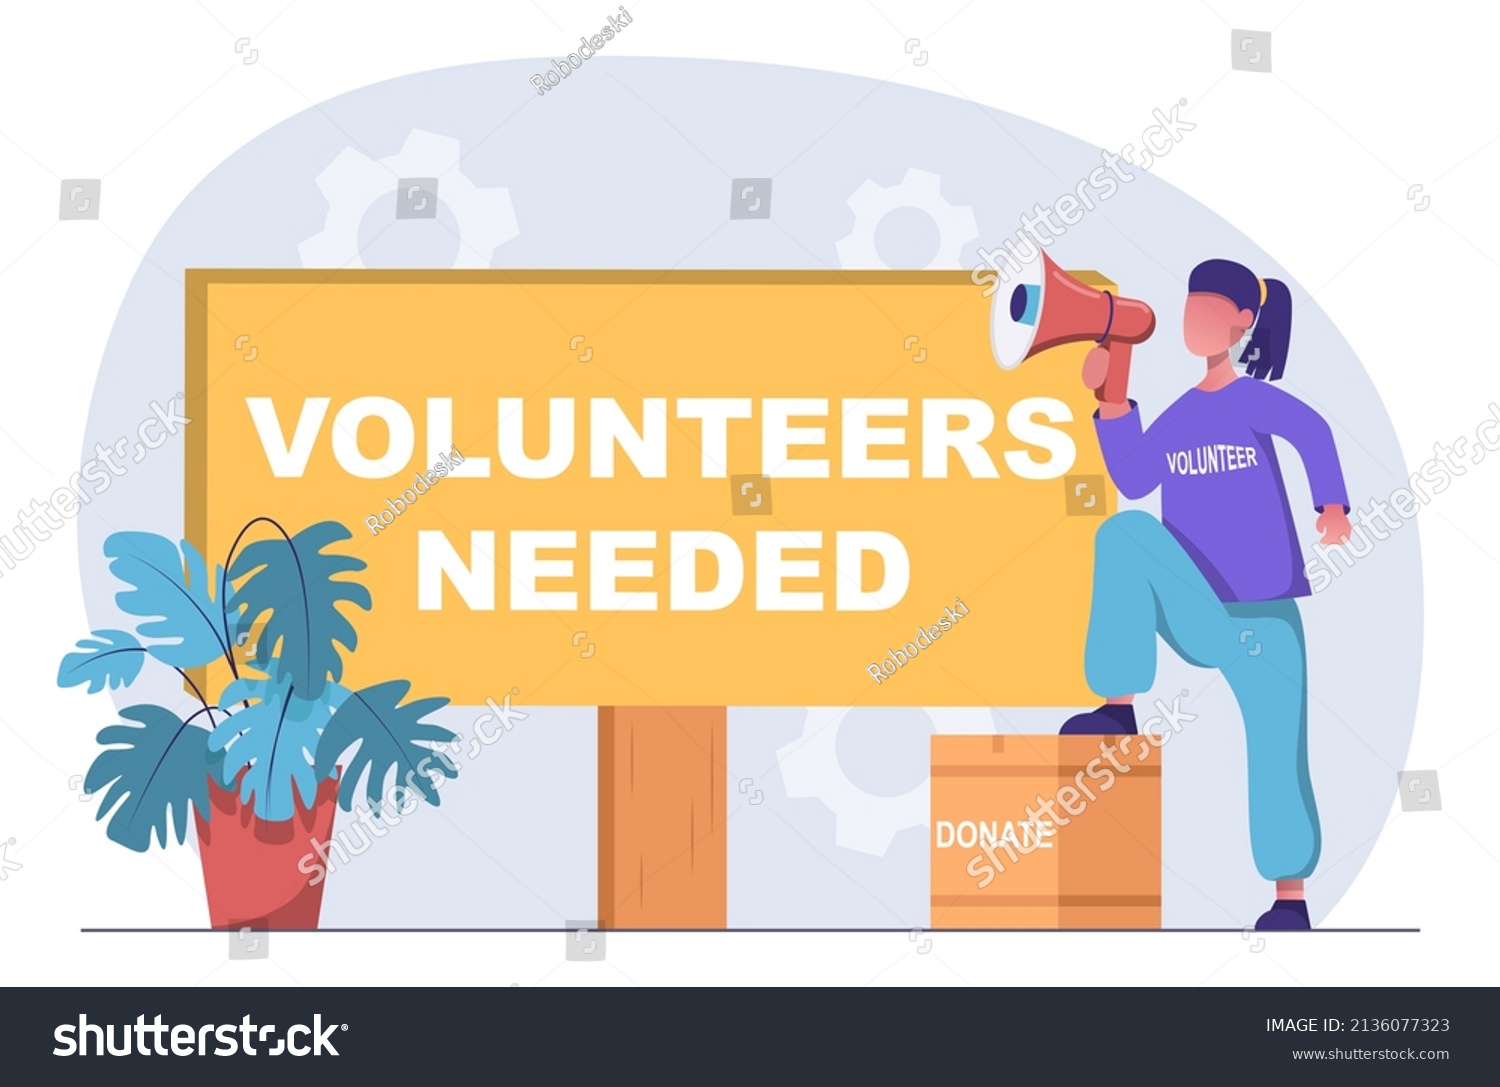 SVG of Volunteers needed. Volunteering. Volunteer organization is recruiting volunteers. Girl with a mouthpiece says she needs volunteers. svg